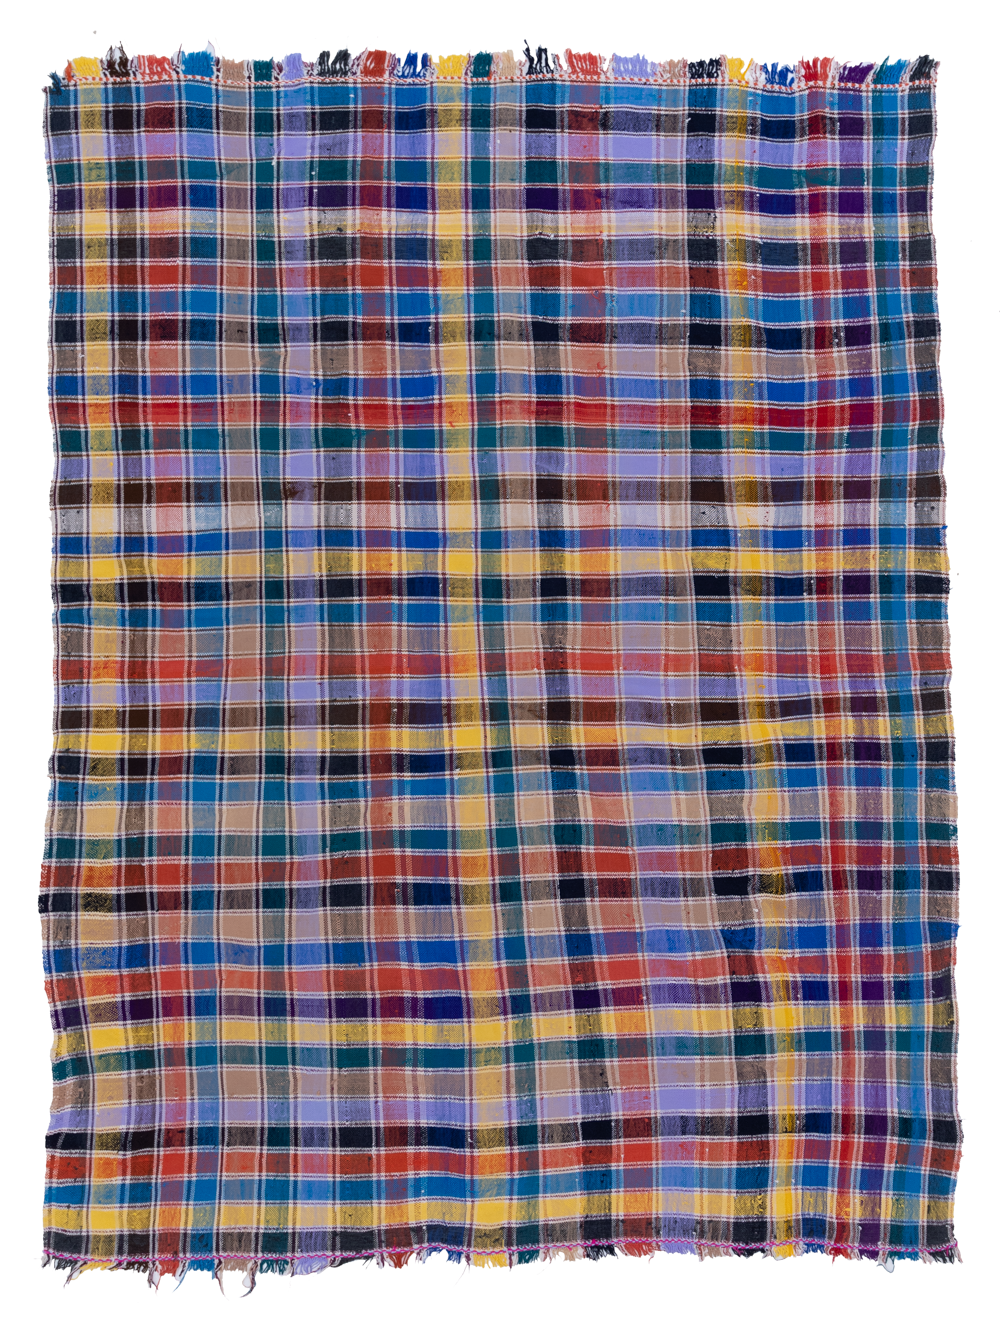 6 x 8 Vintage Moroccan Blanket